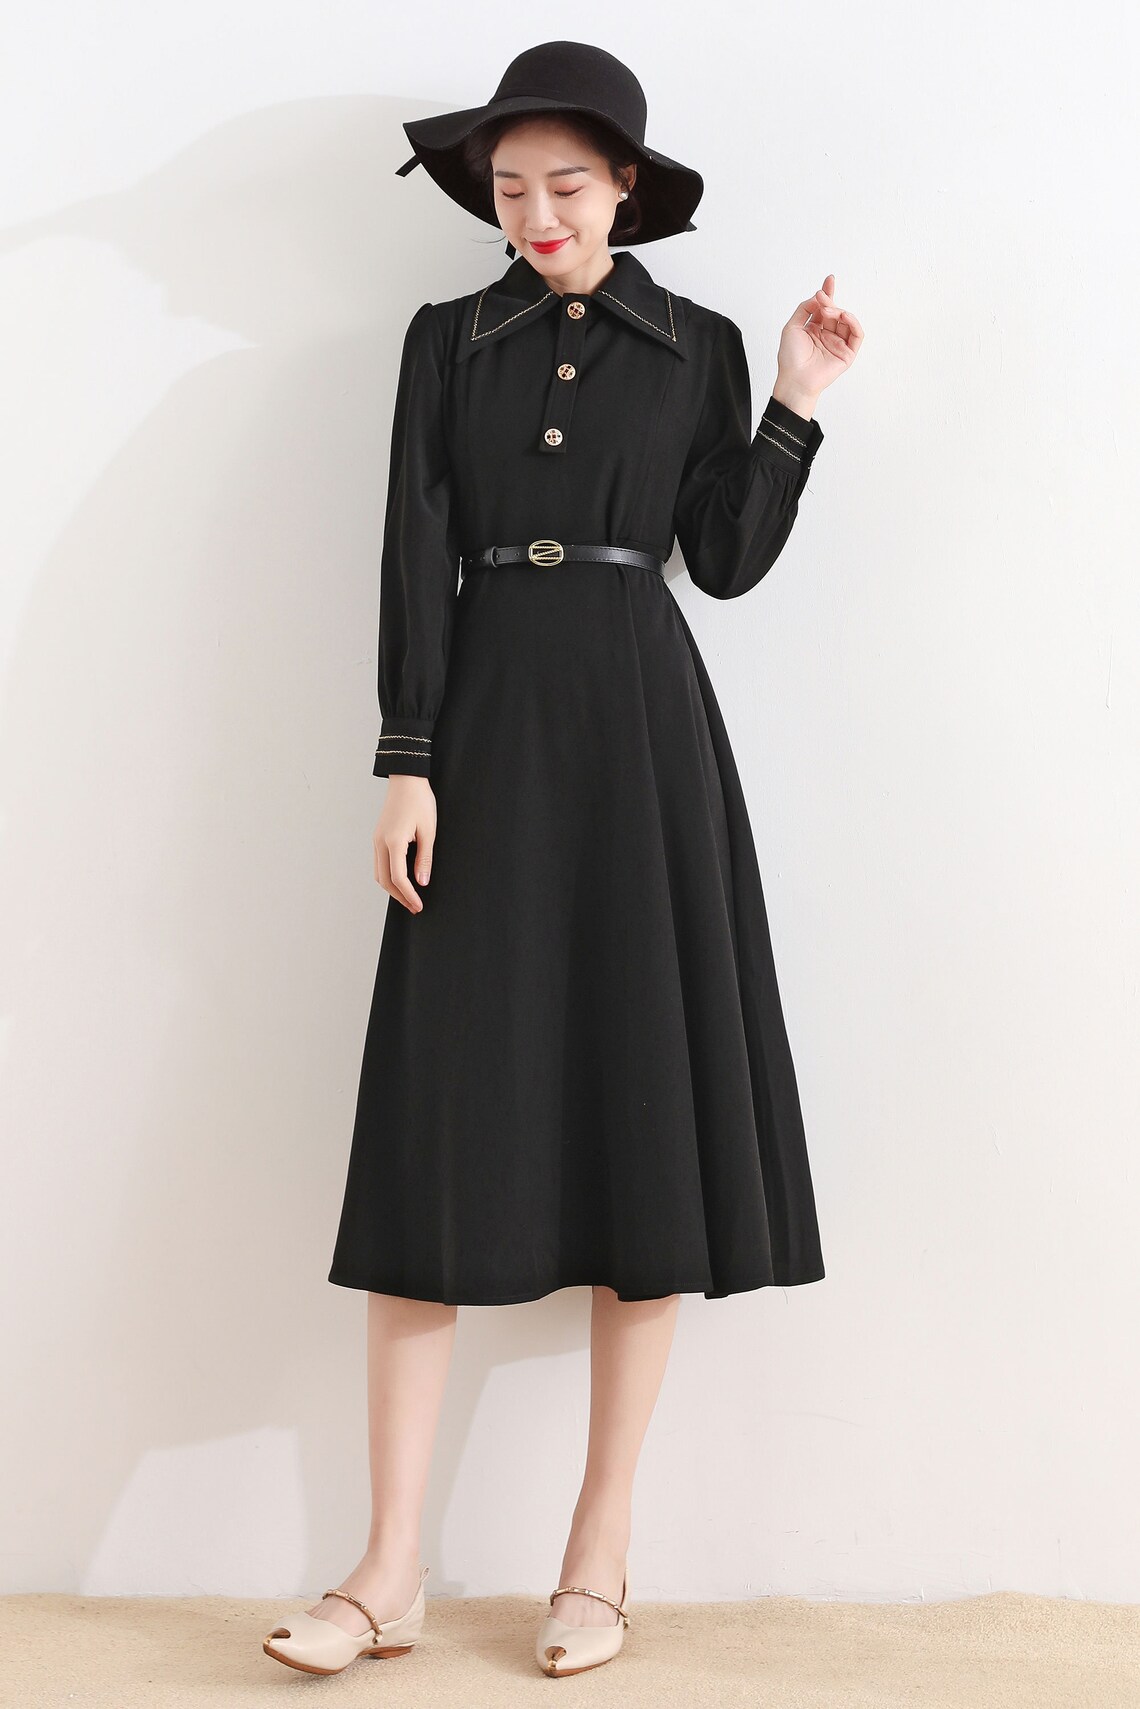 Long sleeve Shirtwaist Dress Vintage inspired Black midi | Etsy